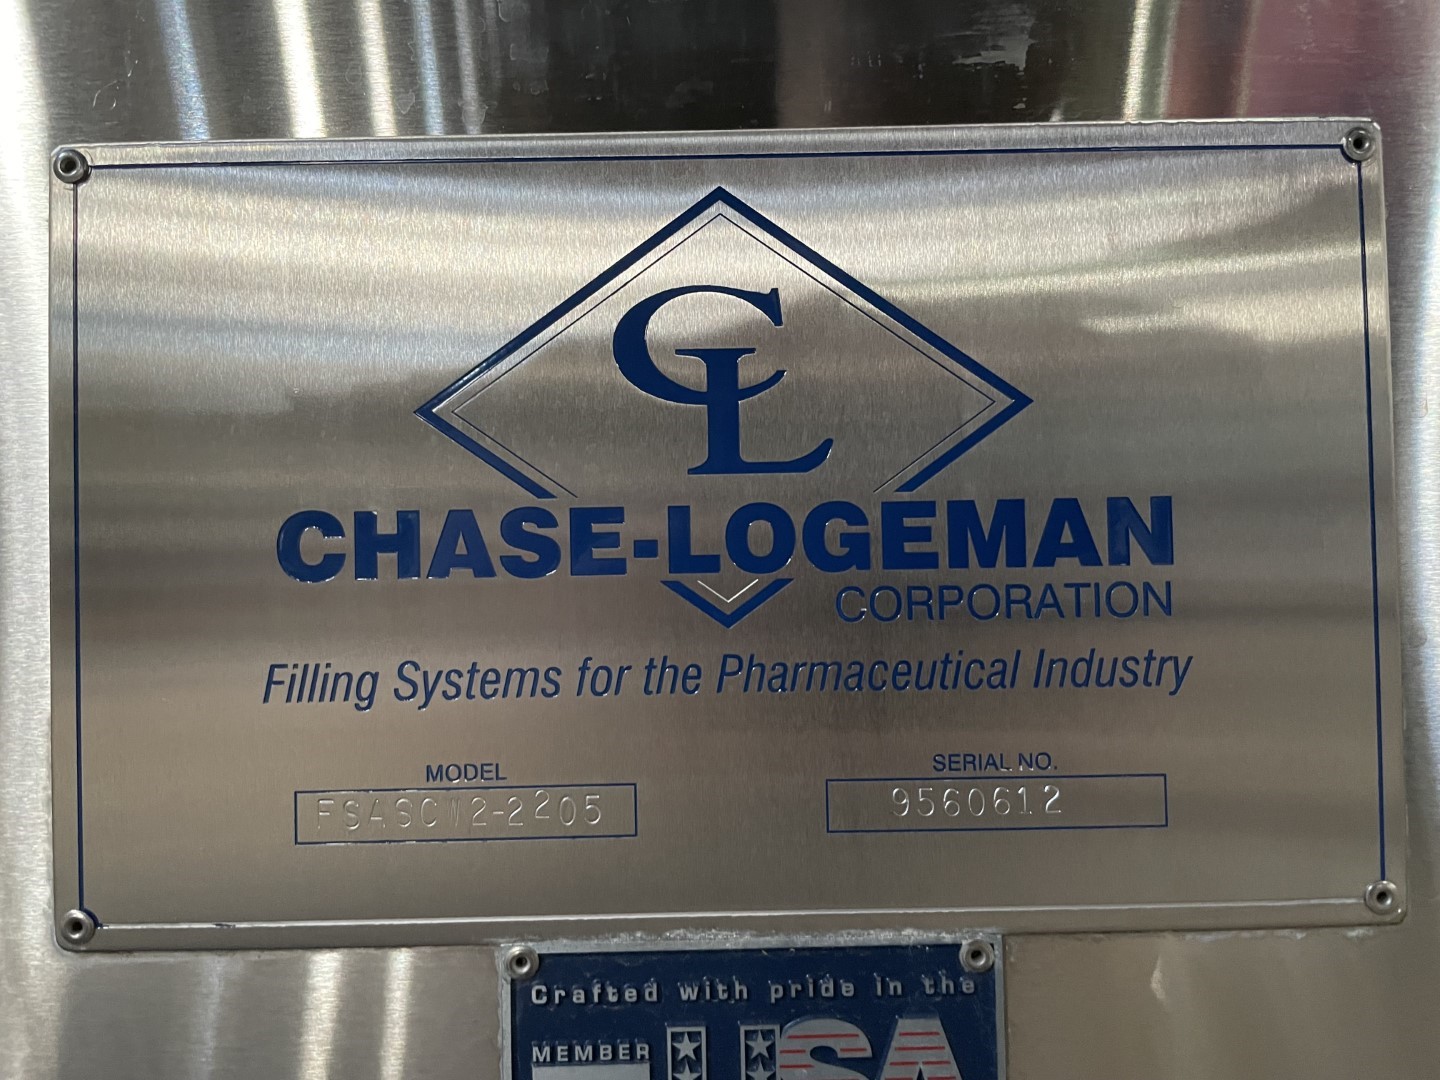 Chase Logeman Aseptic Filling Line, Model FSASCW2-2205